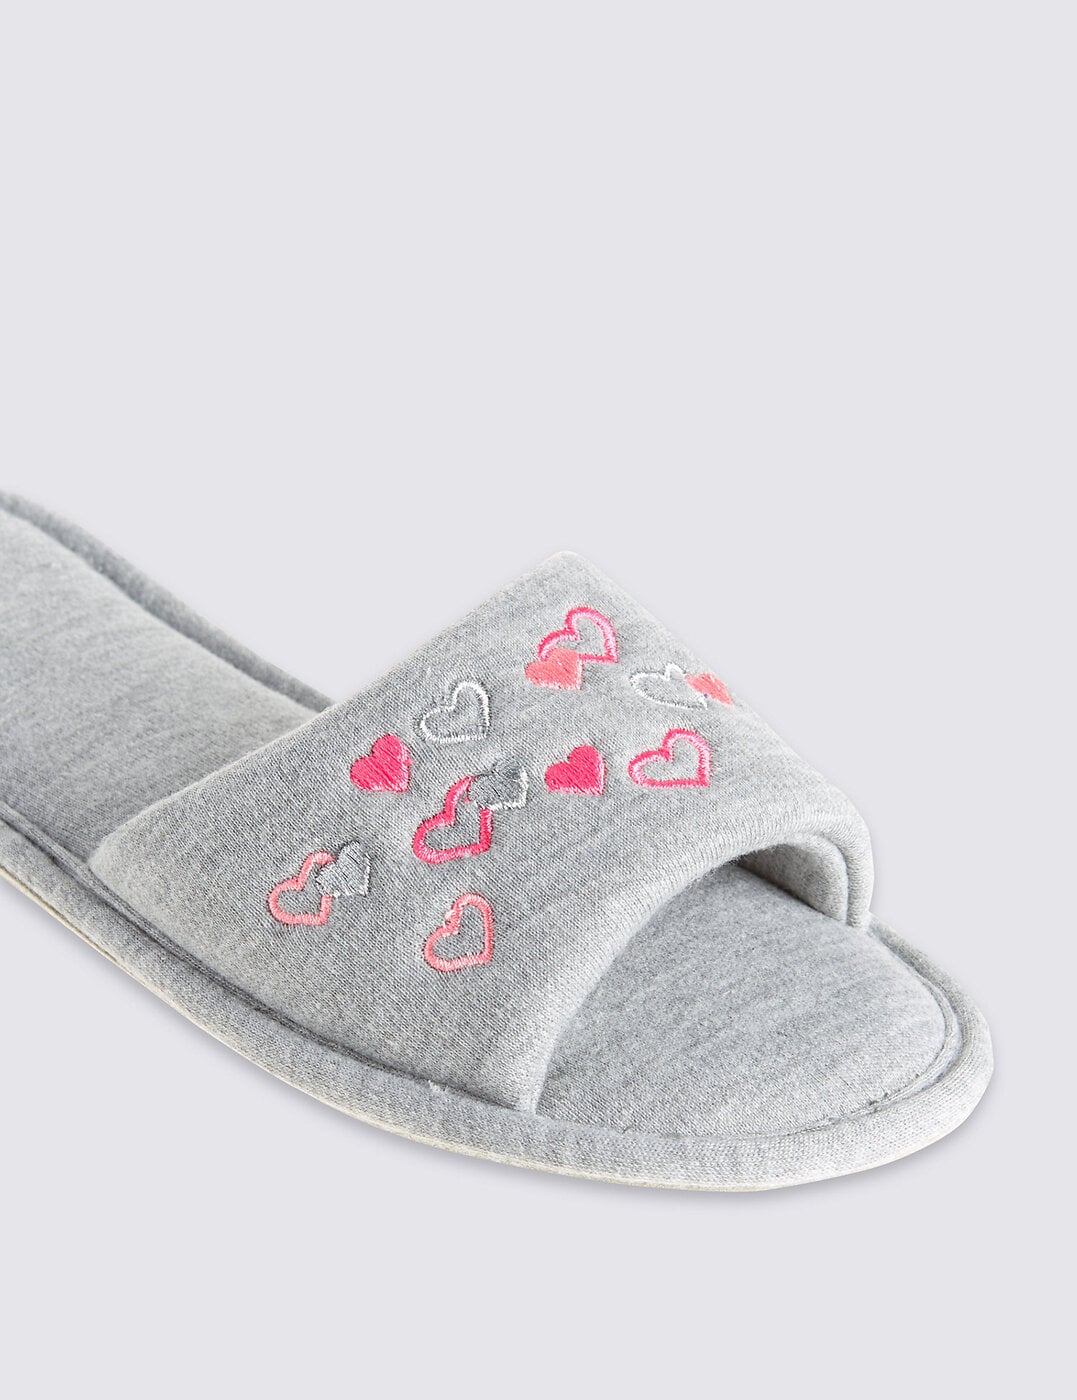 Spencer Fuzzy Slippers for Women Men, Comfy House Slipper Outdoor Indoor  Warm Plush Bedroom Shoes Cute Cat Paw Slip-On Slipper - Walmart.com